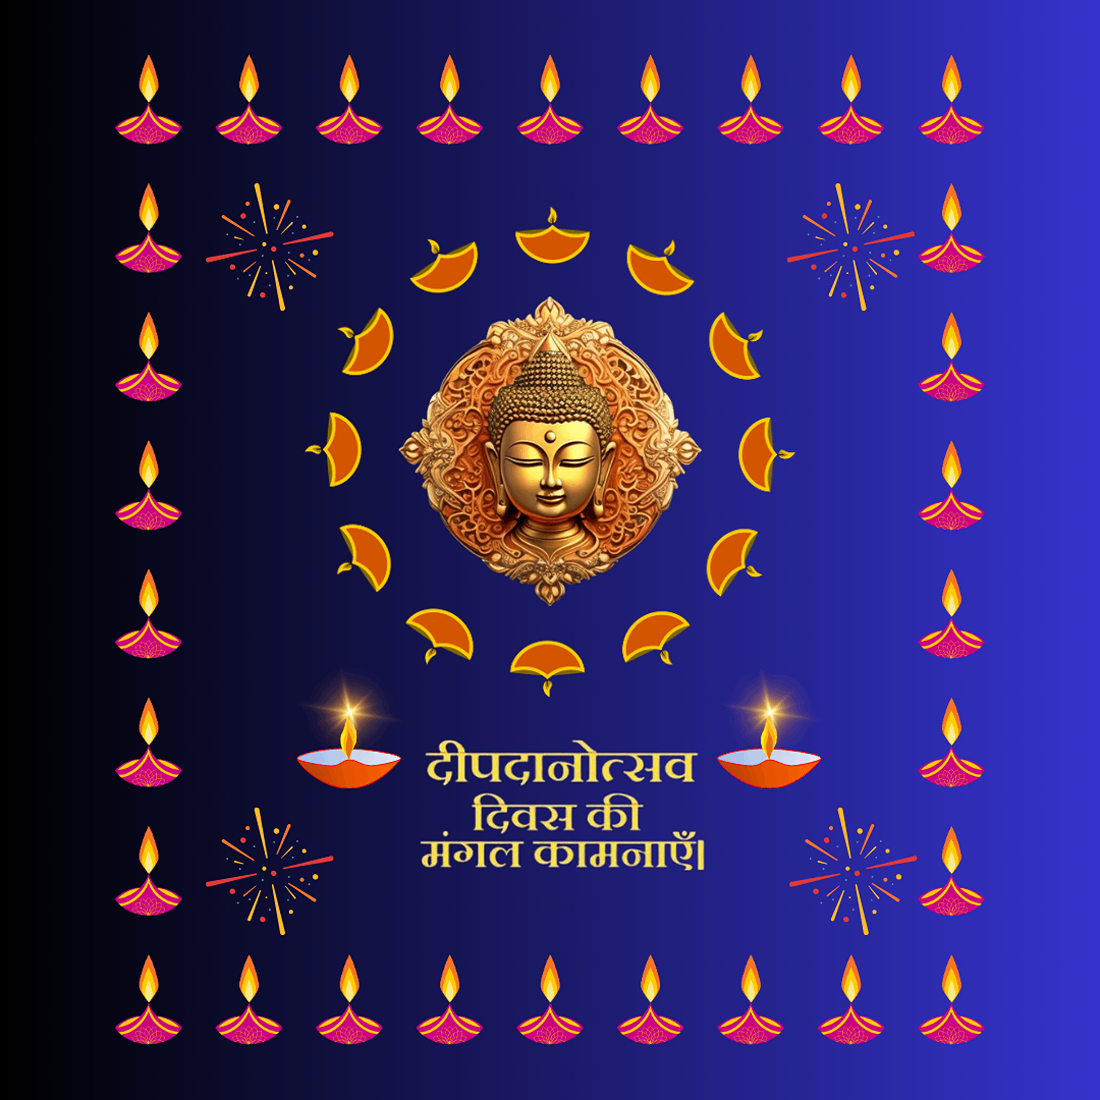 Buddha Deep daan Utsav - Design Template Instagram Post cover image.